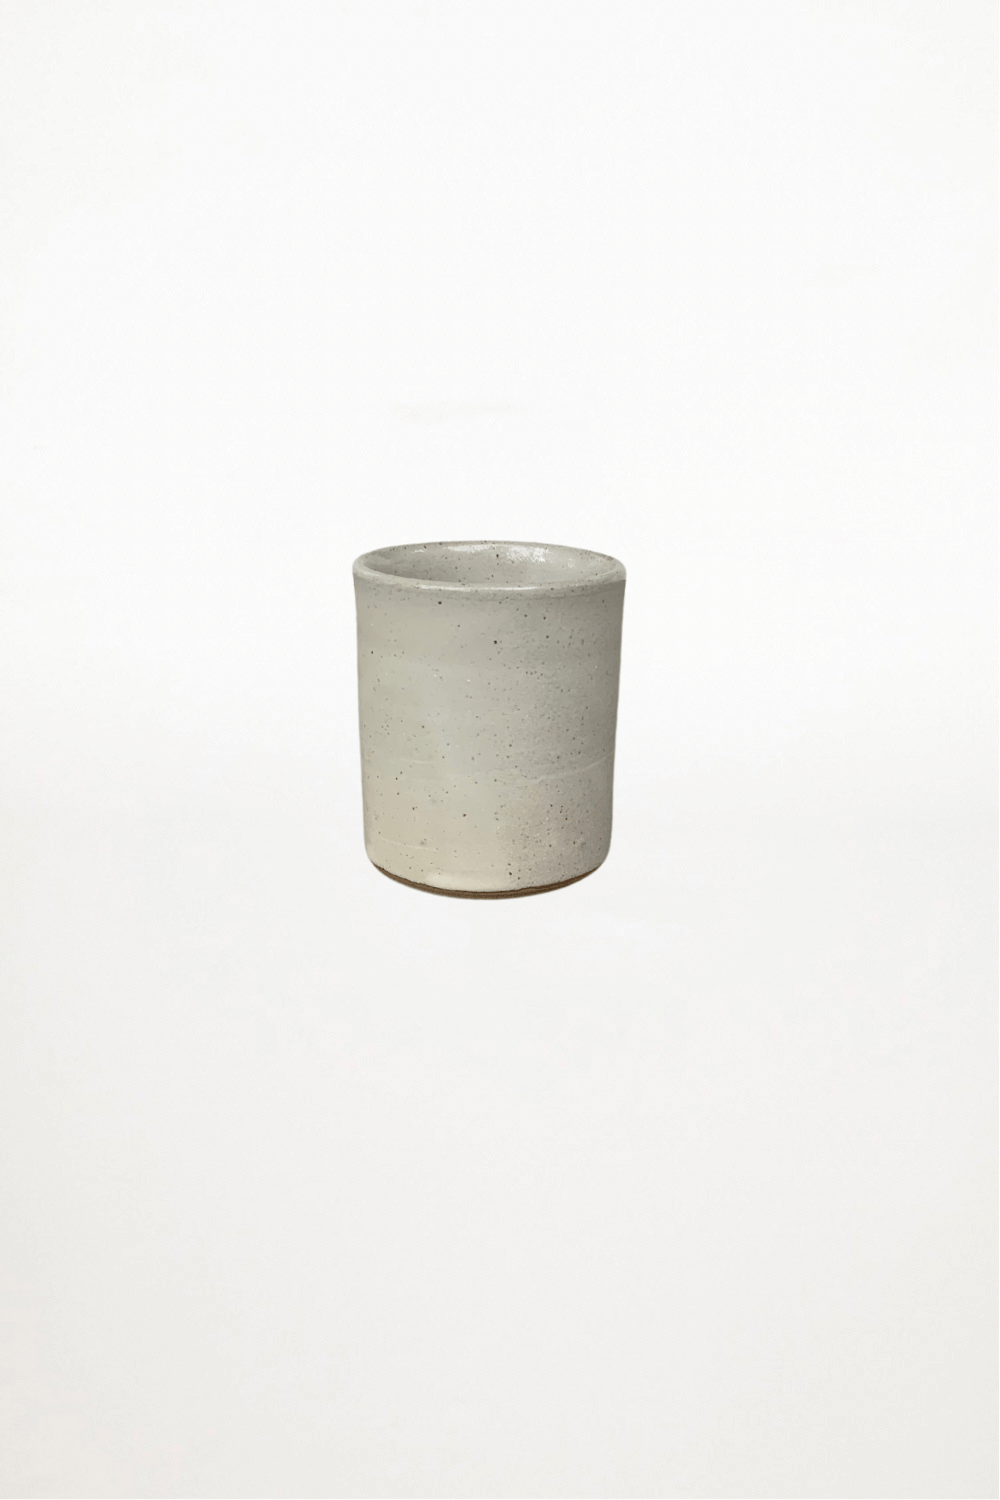 Bennetts Pottery - Cup - Cream - Ensemble Studios